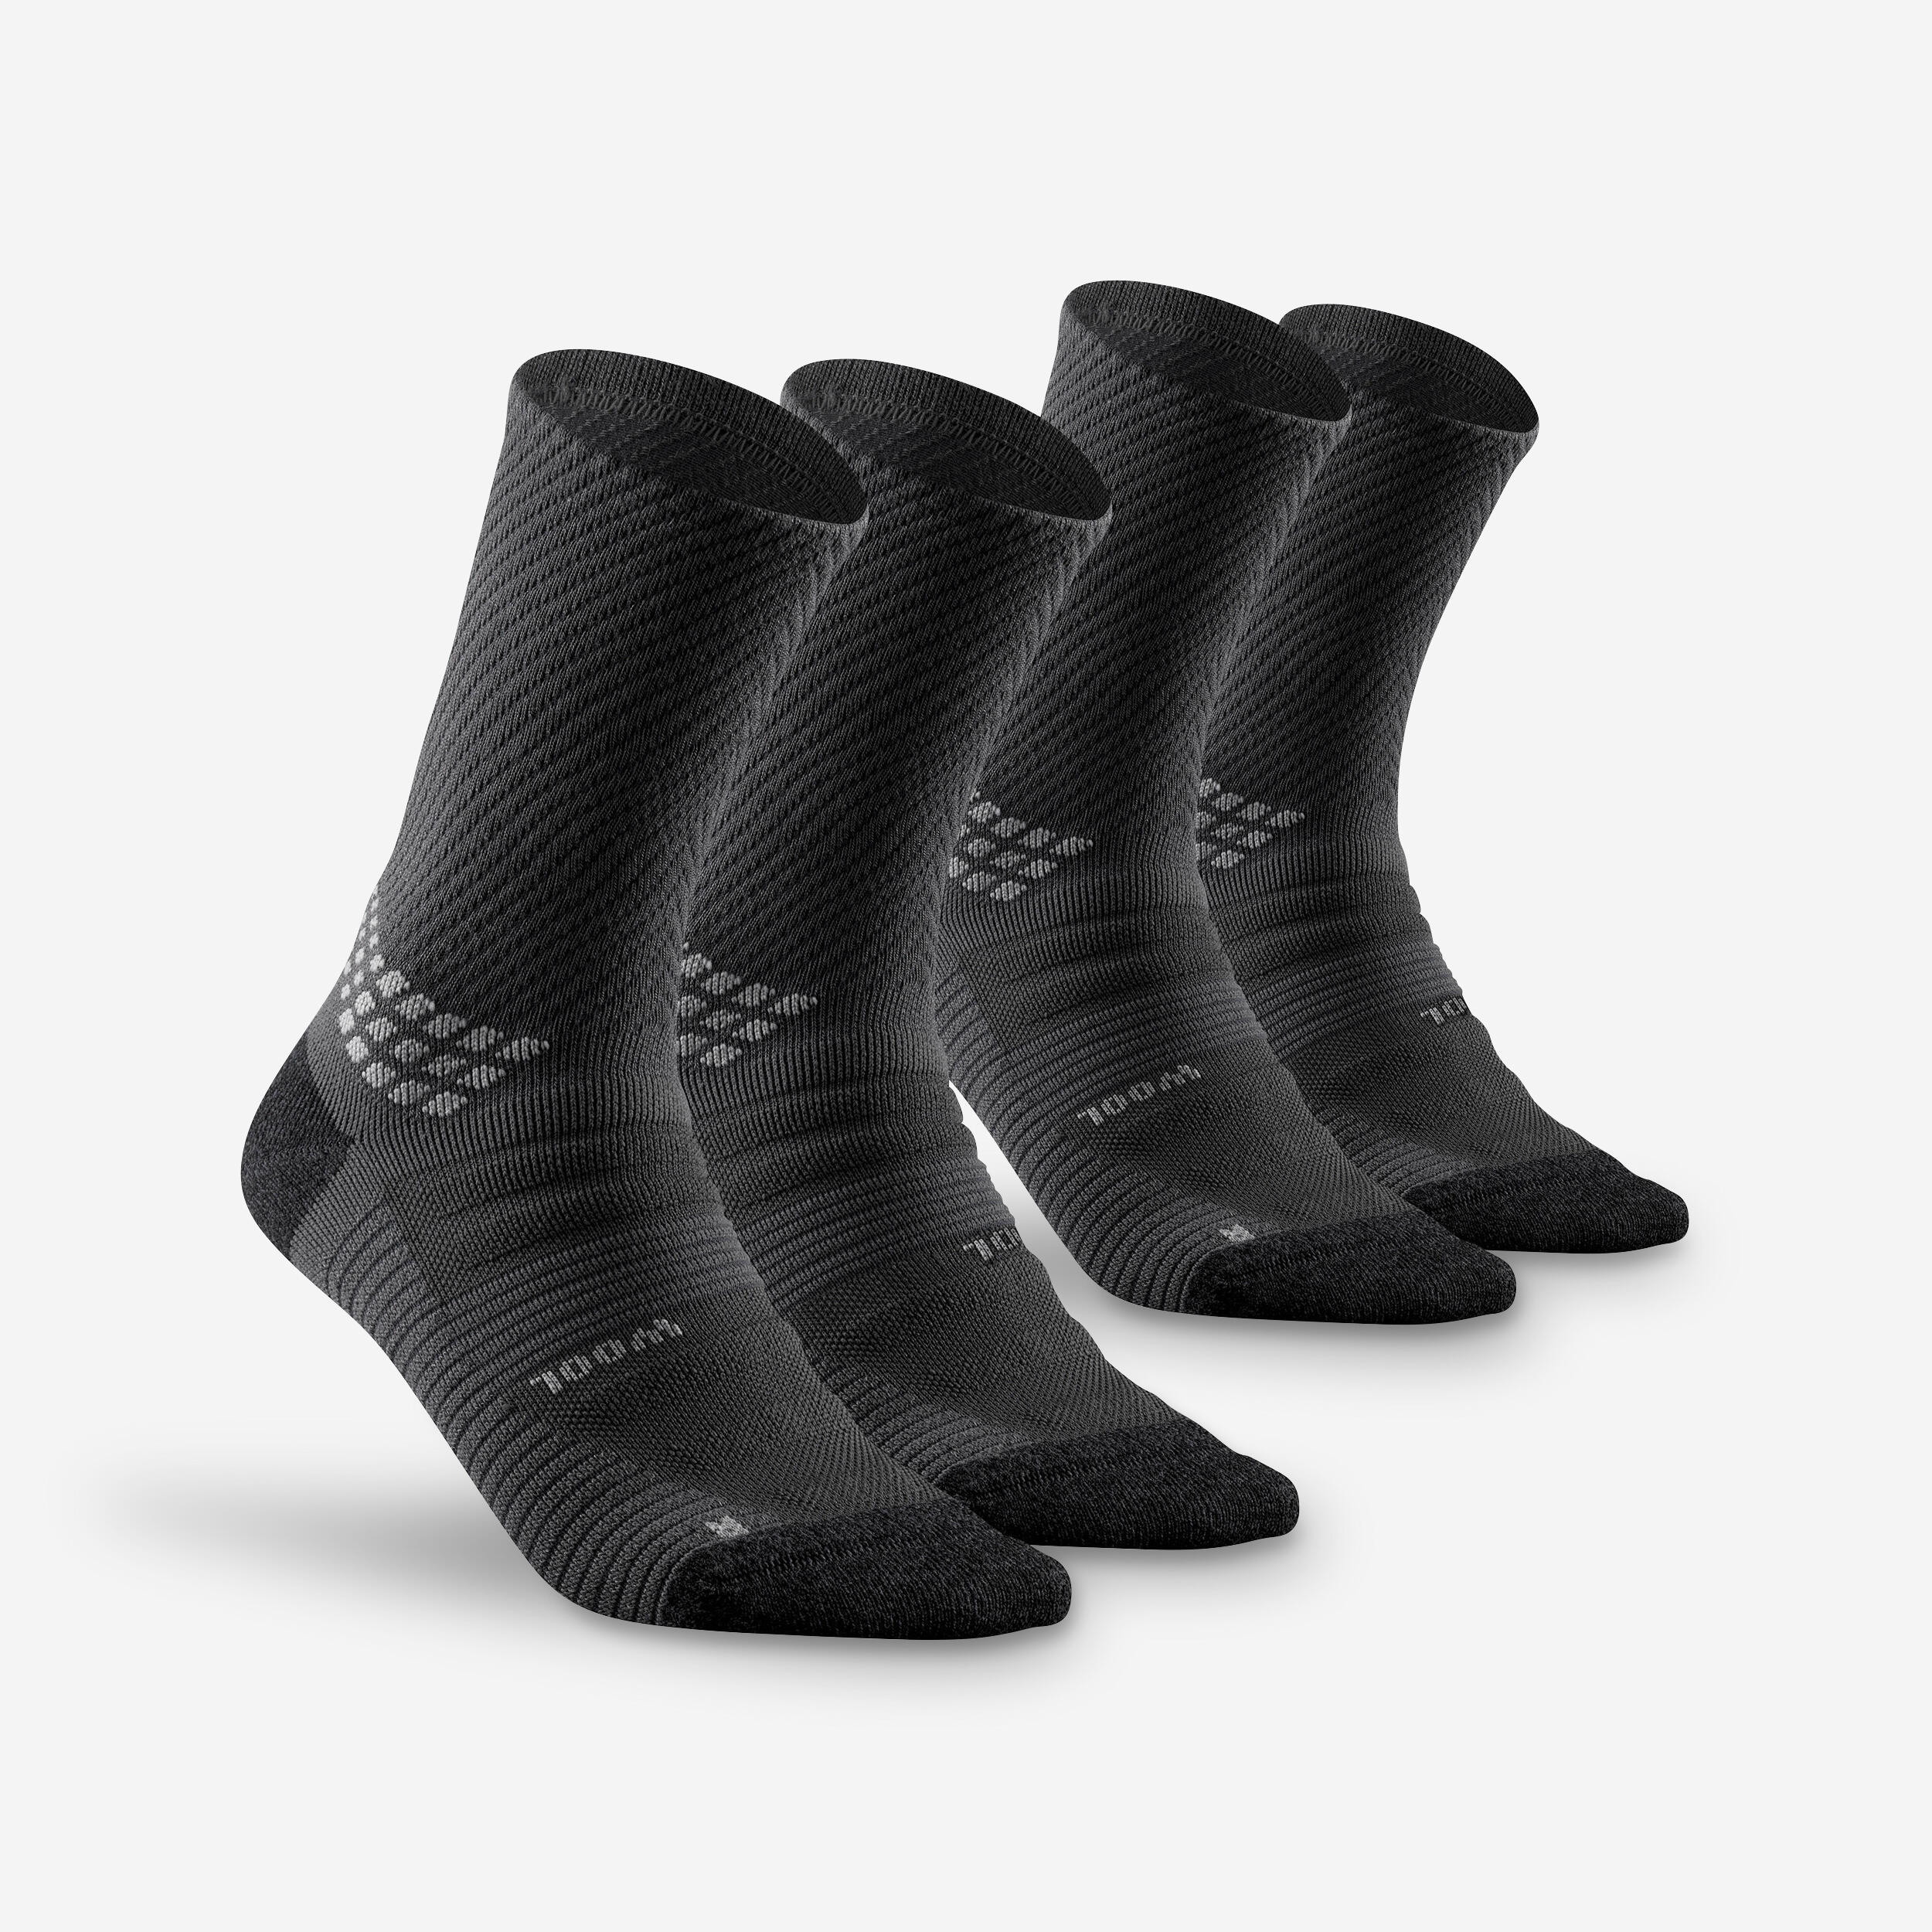 Mountain Hiking Mid Socks Quechua MH900 x 2 Pairs - Black